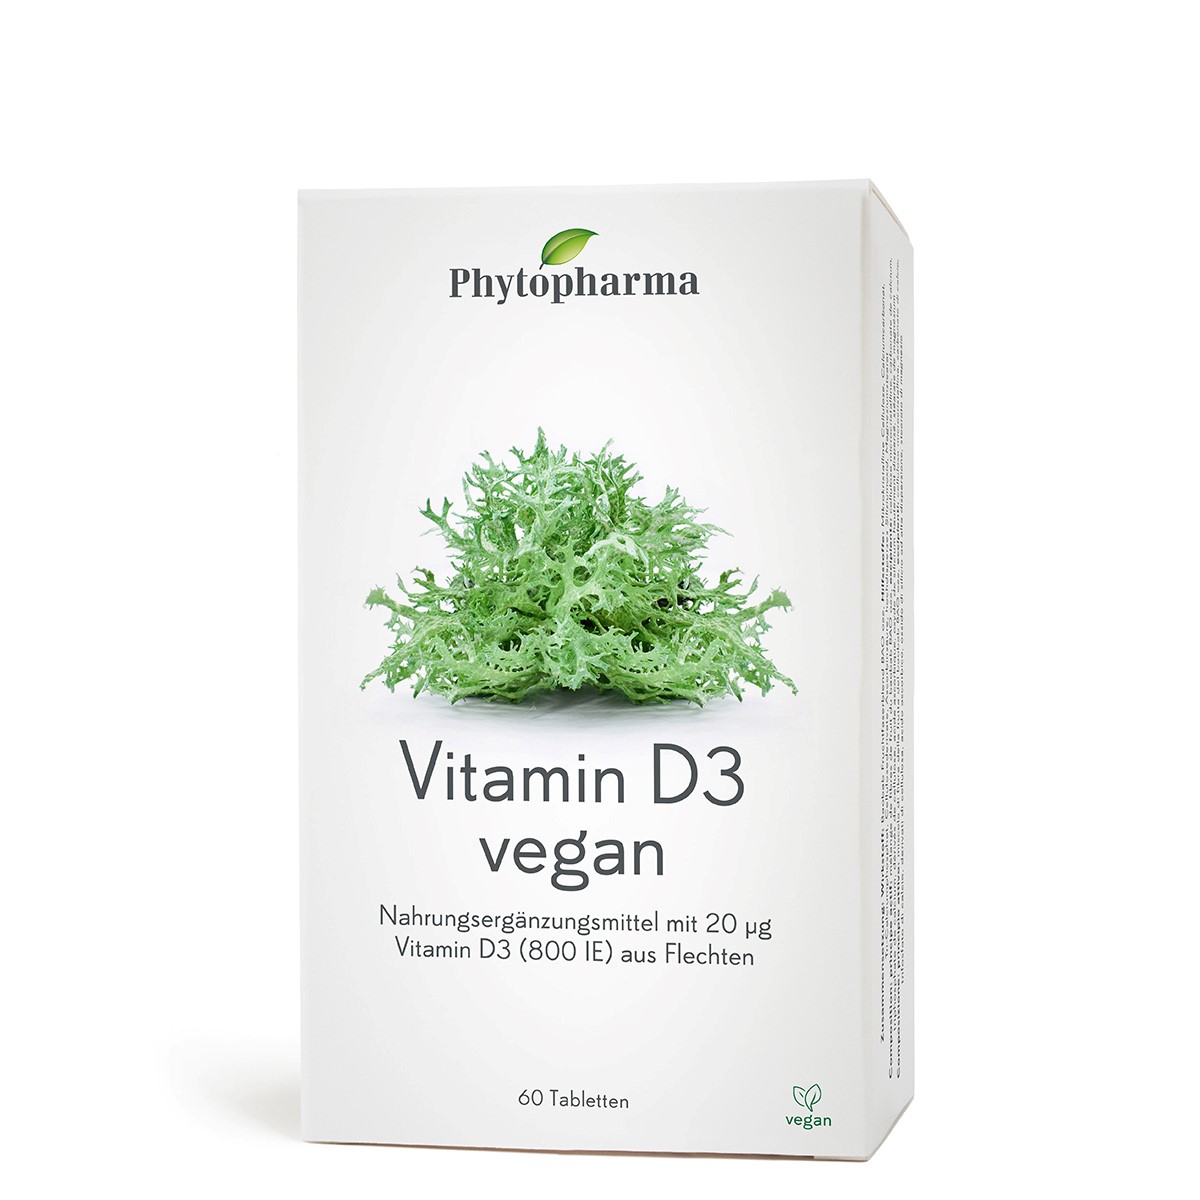 Phytopharma Vitamin D3 vegan Tbl 60Stk